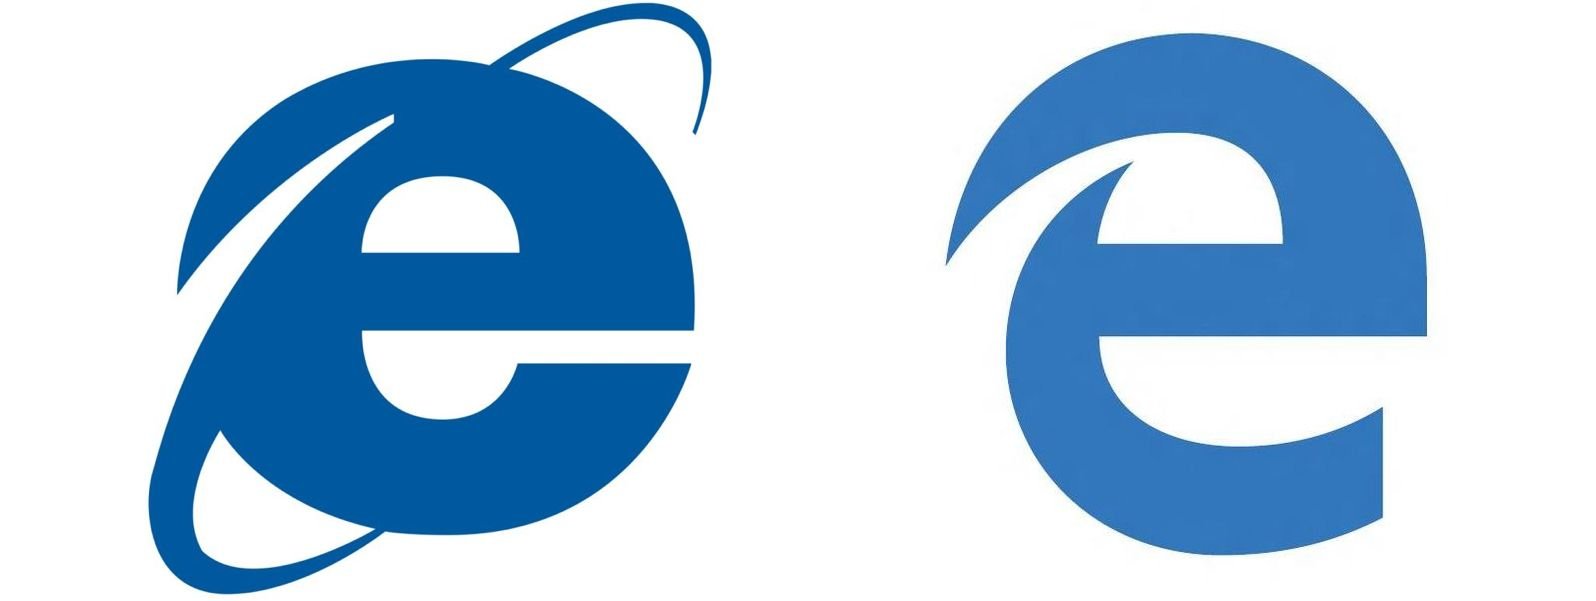 ire-edge-logo-sbs.jpg